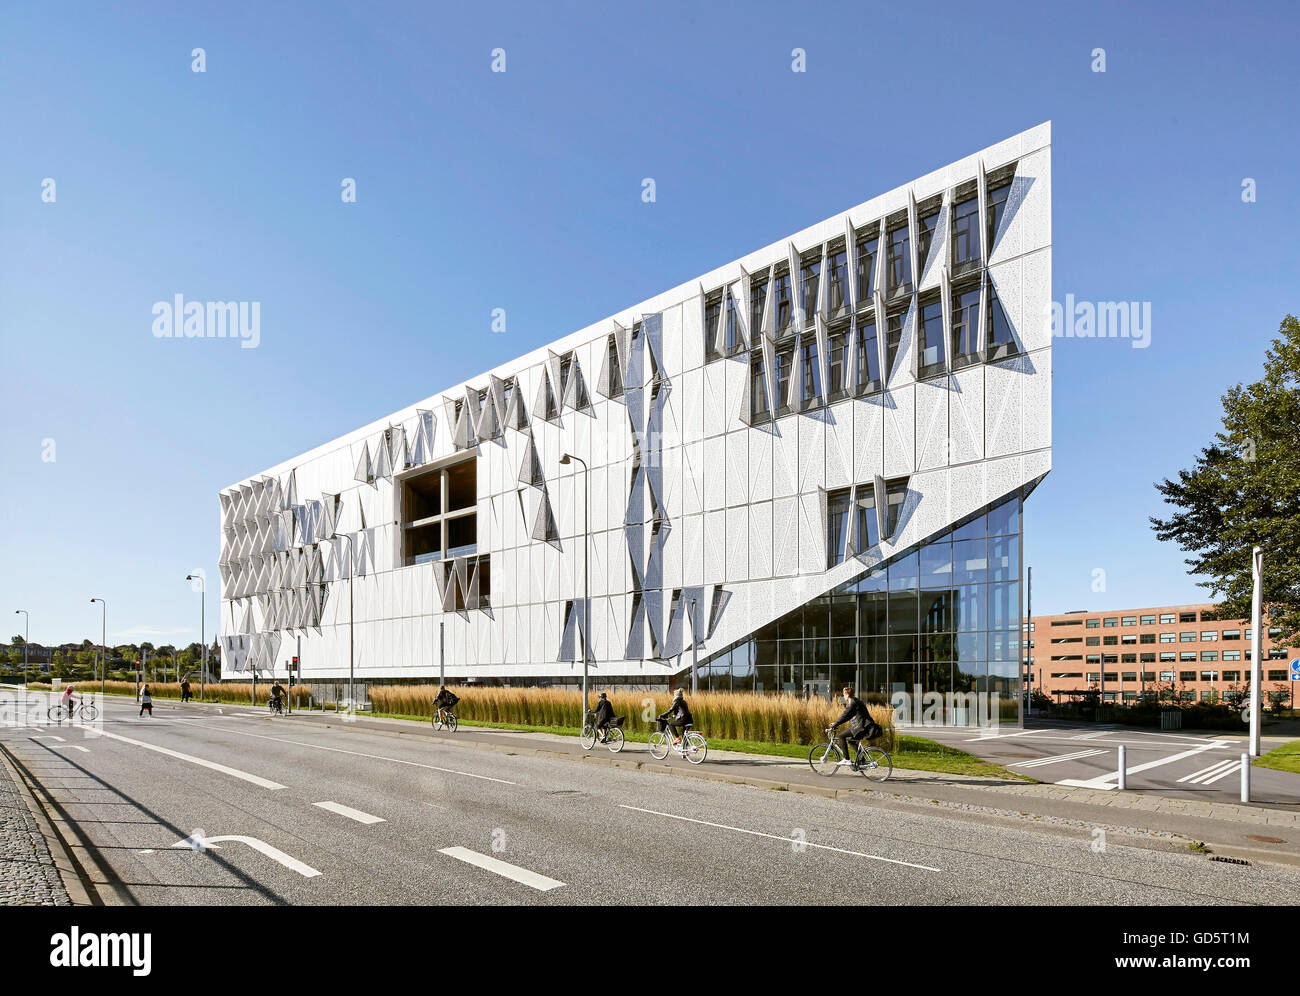 Gebäude-Perspektive mit Straße und Radfahrer. SDU Campus Kolding, Kolding, Dänemark. Architekt: Henning Larsen Architects, 2015. Stockfoto